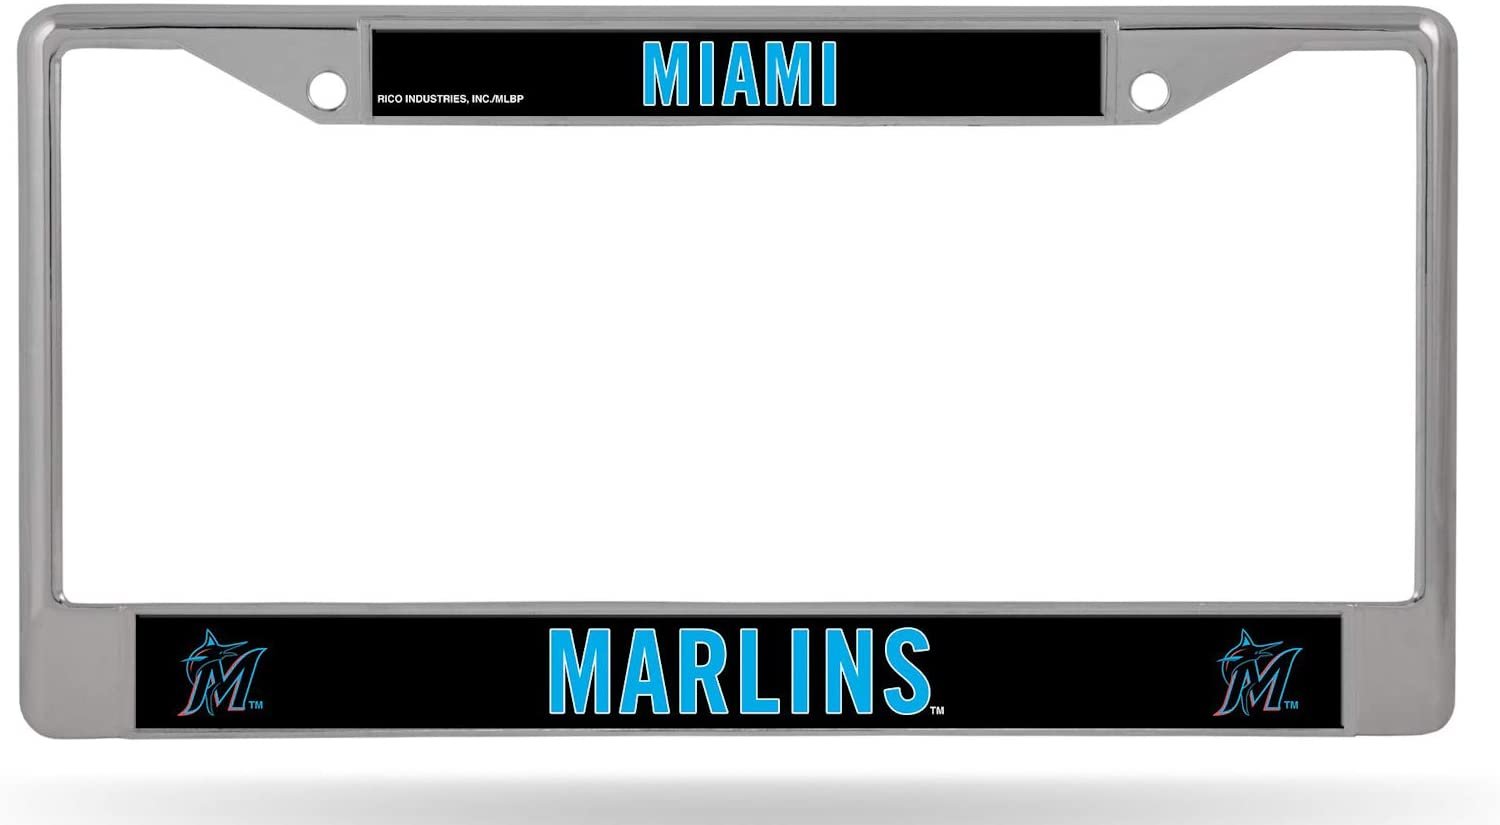 Miami Marlins Premium Metal License Plate Frame Chrome Tag Cover, 12x6 Inch